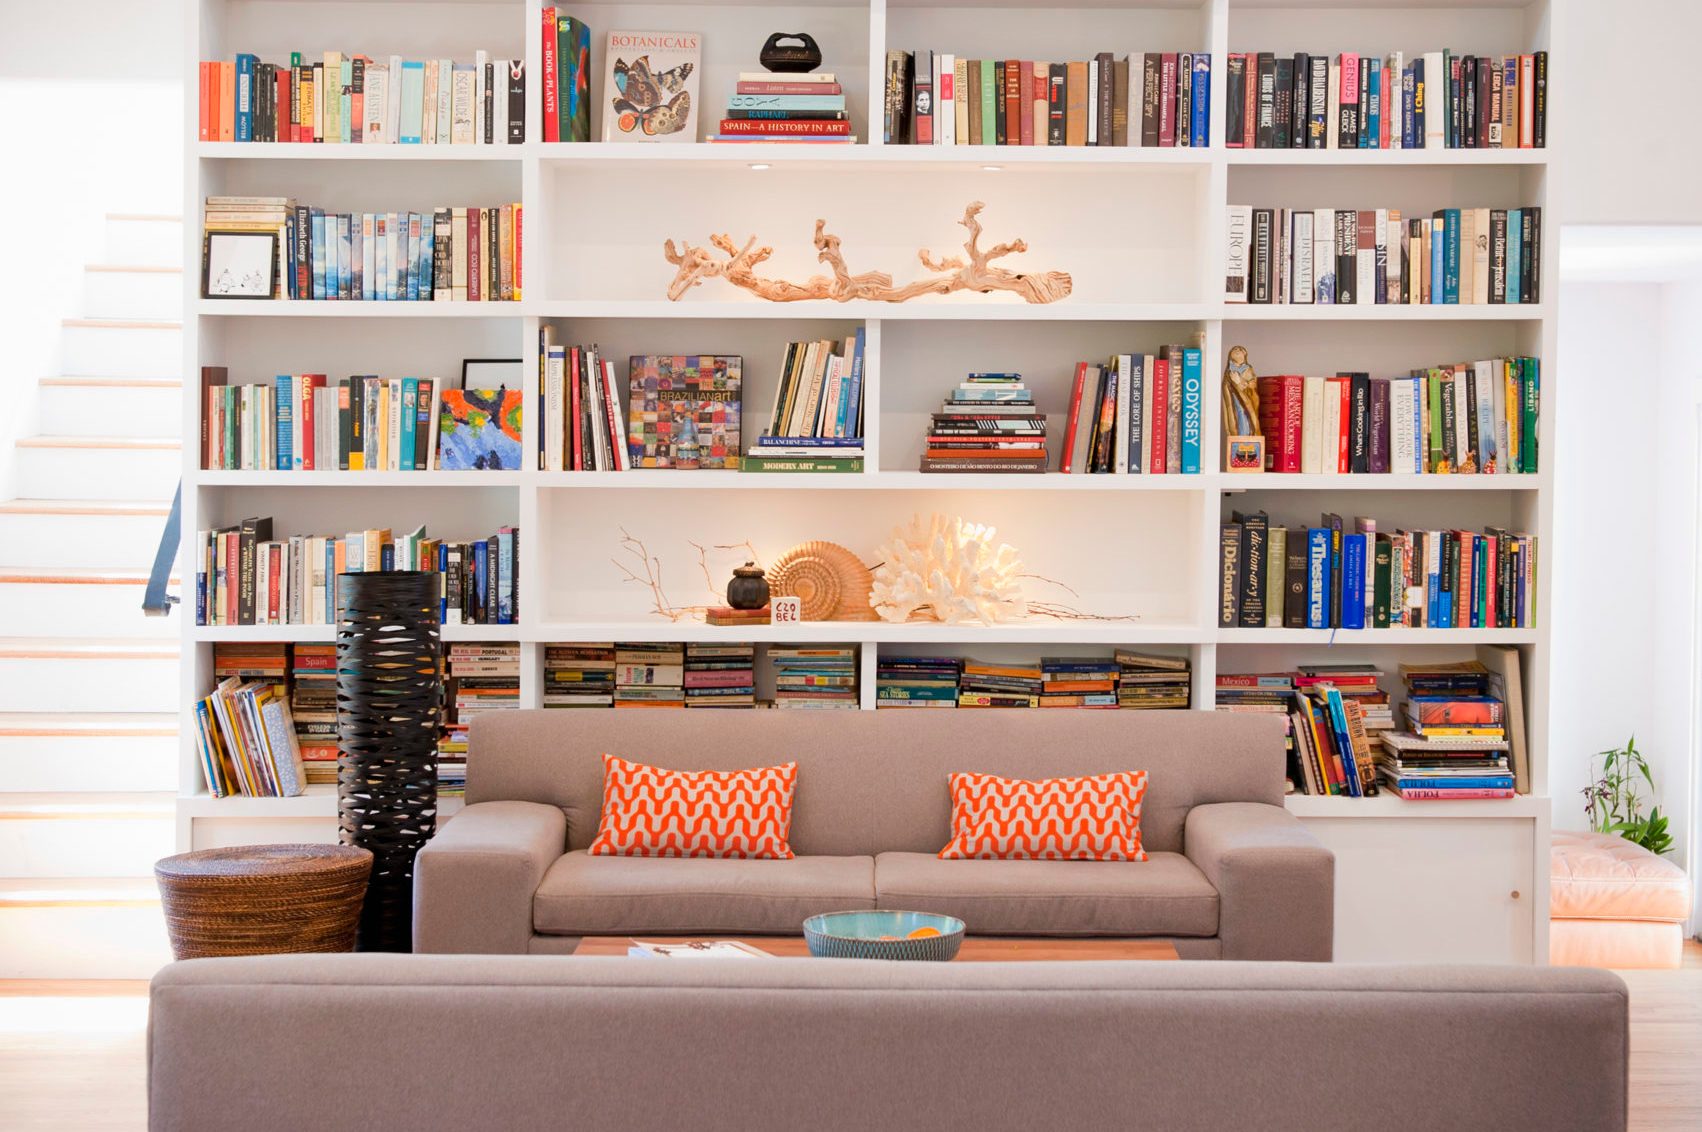 light-filled modernist style living room